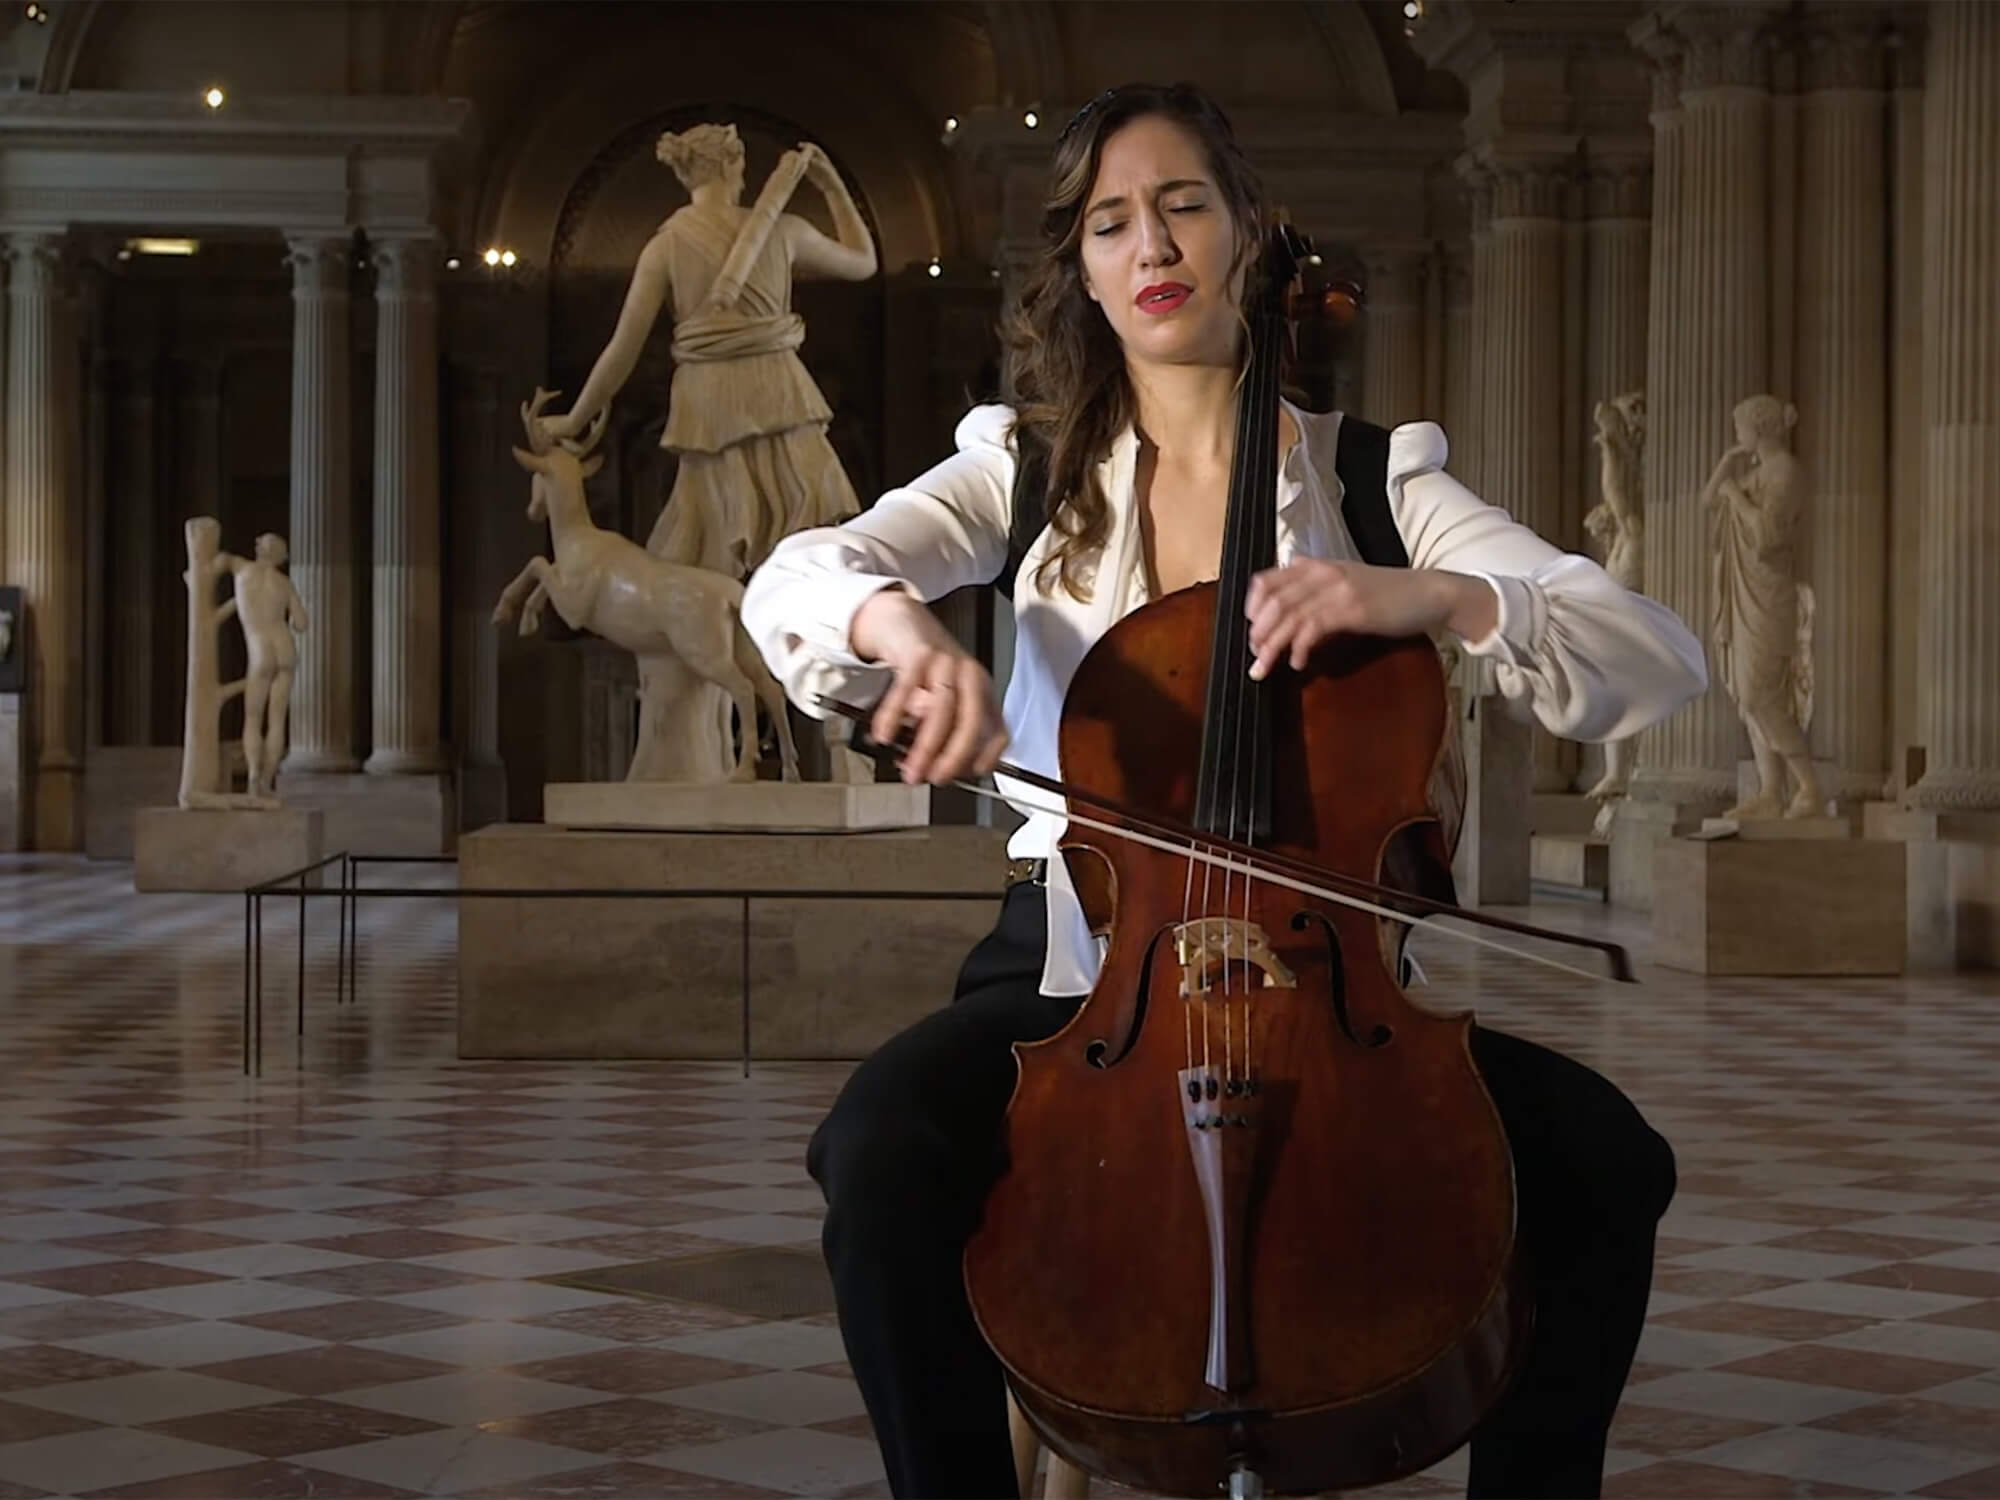 A woman playing cello